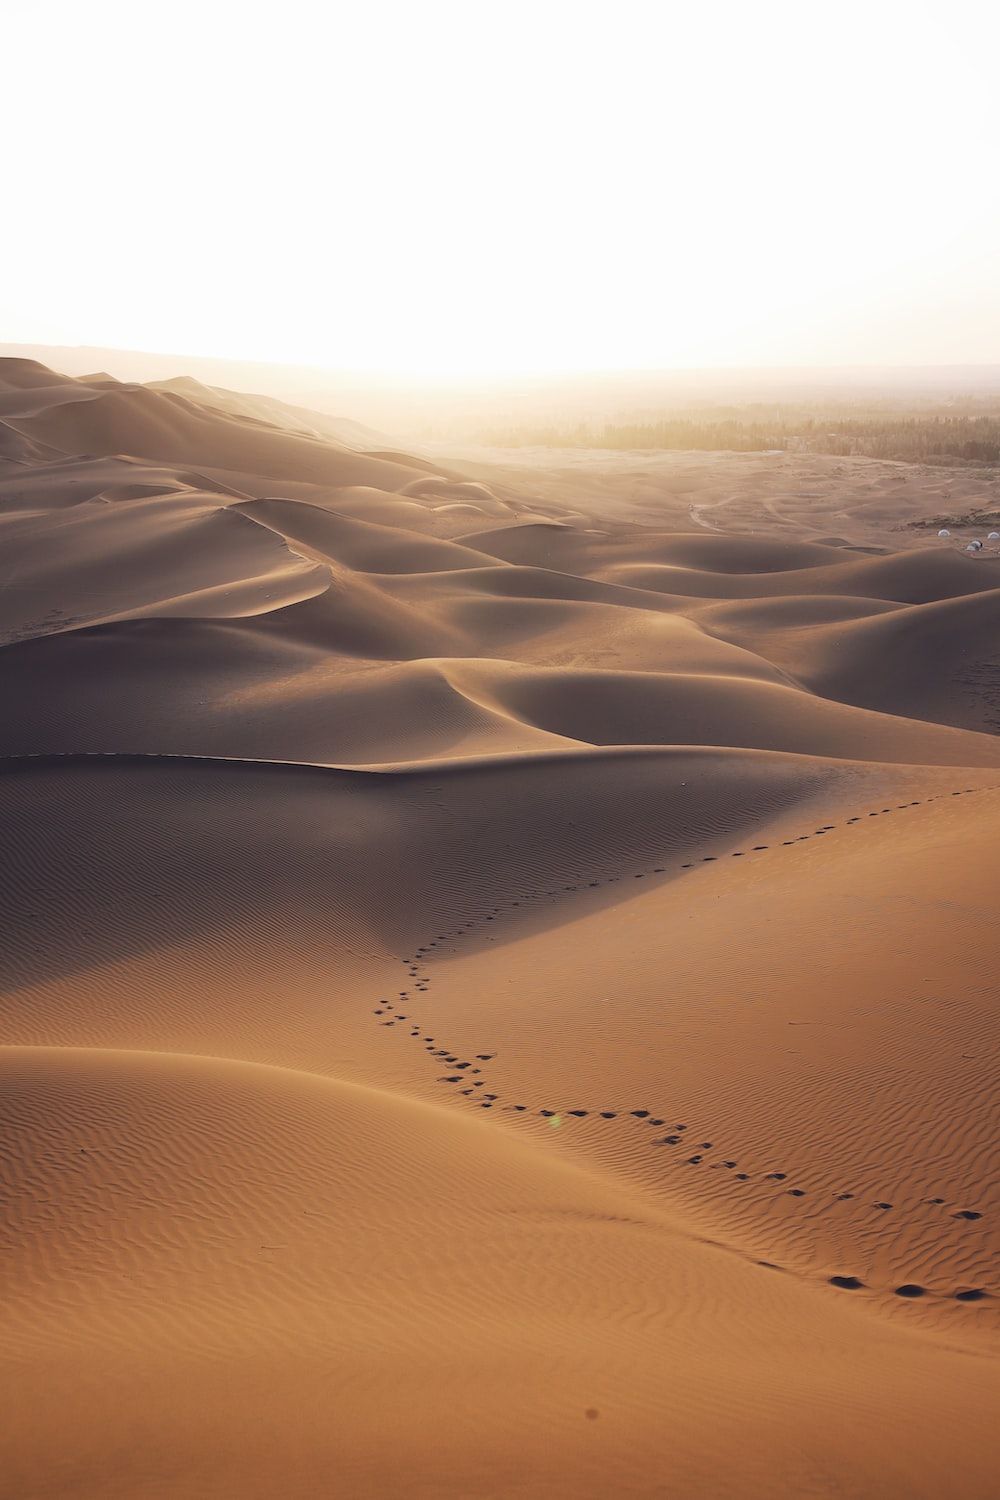 A person walking through the desert with their feet - Desert